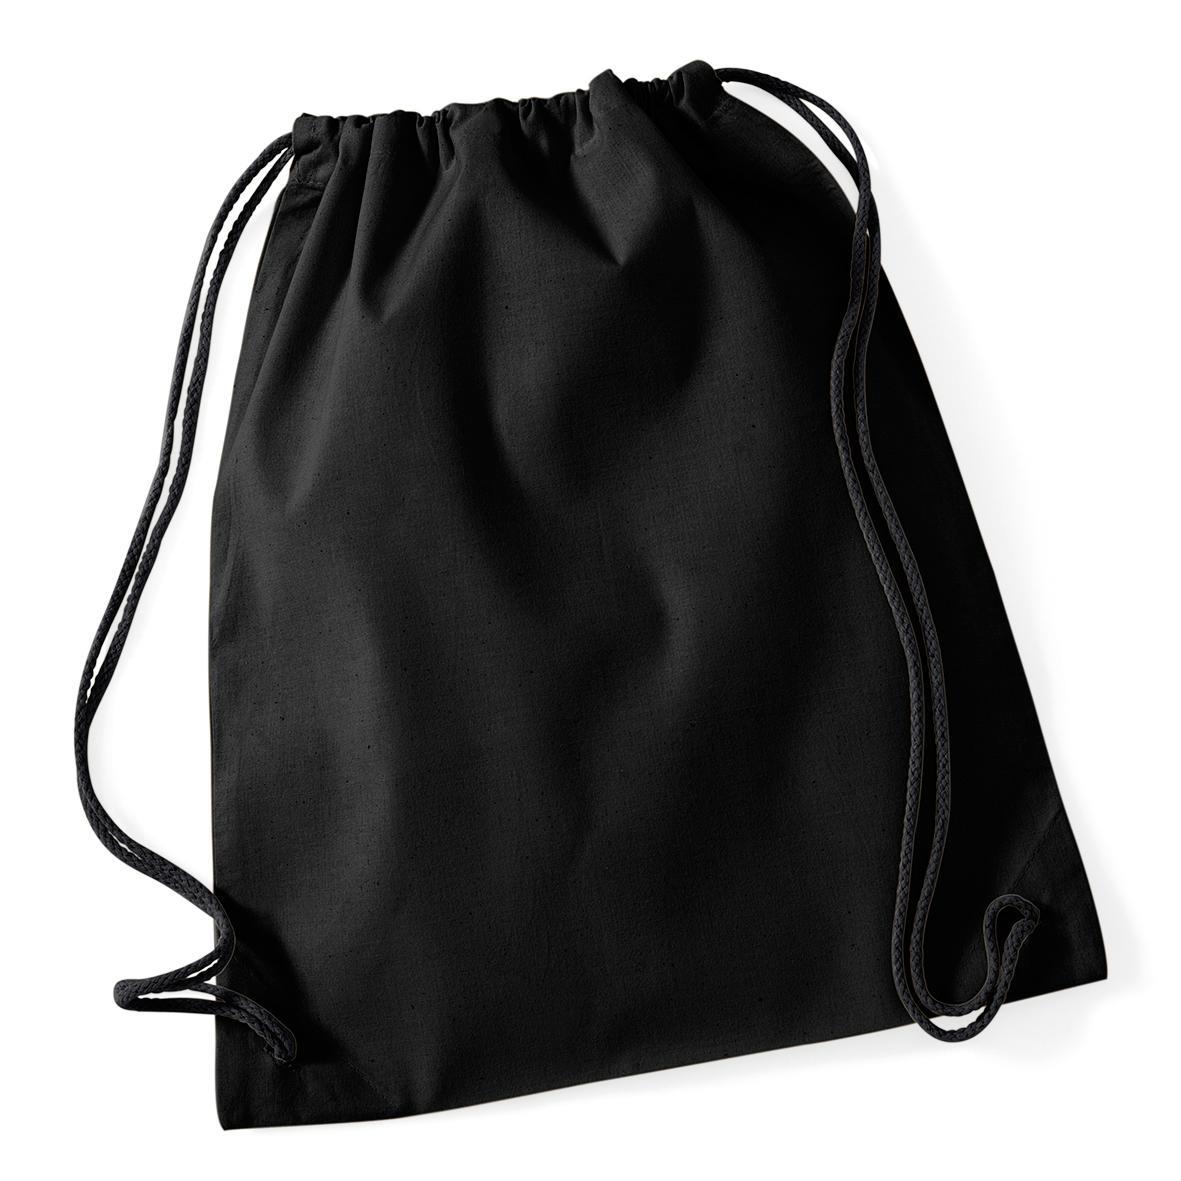 Westford Mill Cotton Gymsac Bag - 12 Litres (Black/Black) (One Size)